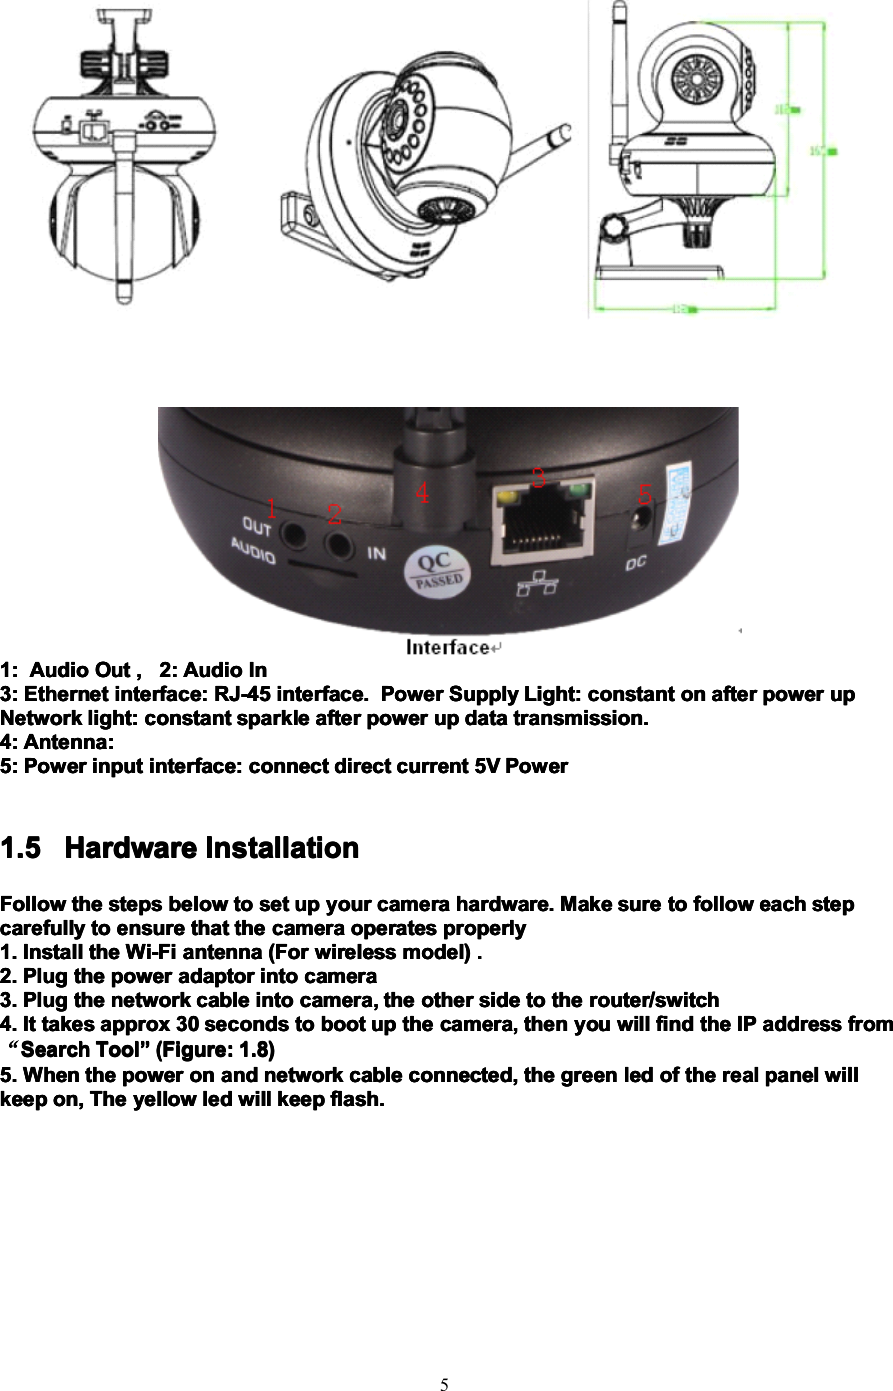 51:1:1:1: AudioAudioAudioAudio OutOutOutOut ,,,, 2:2:2:2: AudioAudioAudioAudio InInInIn3:3:3:3: EthernetEthernetEthernetEthernet interface:interface:interface:interface: RJ-45RJ-45RJ-45RJ-45 interface.interface.interface.interface. PowerPowerPowerPower SupplySupplySupplySupply Light:Light:Light:Light: constantconstantconstantconstant onononon afterafterafterafter powerpowerpowerpower upupupupNetworkNetworkNetworkNetwork light:light:light:light: constantconstantconstantconstant sparklesparklesparklesparkle afterafterafterafter powerpowerpowerpower upupupup datadatadatadata transmission.transmission.transmission.transmission.4:4:4:4: Antenna:Antenna:Antenna:Antenna:5:5:5:5: PowerPowerPowerPower inputinputinputinput interface:interface:interface:interface: connectconnectconnectconnect directdirectdirectdirect currentcurrentcurrentcurrent 5V5V5V5V PowerPowerPowerPower1.51.51.51.5 HardwareHardwareHardwareHardware InstallationInstallationInstallationInstallationFollowFollowFollowFollow thethethethe stepsstepsstepssteps belowbelowbelowbelow totototo setsetsetset upupupup youryouryouryour cameracameracameracamera hardware.hardware.hardware.hardware. MakeMakeMakeMake suresuresuresure totototo followfollowfollowfollow eacheacheacheach stepstepstepstepcarefullycarefullycarefullycarefully totototo ensureensureensureensure thatthatthatthat thethethethe cameracameracameracamera operatesoperatesoperatesoperates properlyproperlyproperlyproperly1.1.1.1. InstallInstallInstallInstall thethethethe Wi-FiWi-FiWi-FiWi-Fi antennaantennaantennaantenna (For(For(For(For wirelesswirelesswirelesswireless model)model)model)model) ....2.2.2.2. PlugPlugPlugPlug thethethethe powerpowerpowerpower adaptoradaptoradaptoradaptor intointointointo cameracameracameracamera3.3.3.3. PlugPlugPlugPlug thethethethe networknetworknetworknetwork cablecablecablecable intointointointo camera,camera,camera,camera, thethethethe otherotherotherother sidesidesideside totototo thethethethe router/switchrouter/switchrouter/switchrouter/switch4.4.4.4. ItItItIt takestakestakestakes approxapproxapproxapprox 30303030 secondssecondssecondsseconds totototo bootbootbootboot upupupup thethethethe camera,camera,camera,camera, thenthenthenthen youyouyouyou willwillwillwill findfindfindfind thethethethe IPIPIPIP addressaddressaddressaddress fromfromfromfrom“SearchSearchSearchSearch ToolToolToolTool ”””” (Figure:(Figure:(Figure:(Figure: 1.8)1.8)1.8)1.8)5.5.5.5. WhenWhenWhenWhen thethethethe powerpowerpowerpower onononon andandandand networknetworknetworknetwork cablecablecablecable connected,connected,connected,connected, thethethethe greengreengreengreen ledledledled ofofofof thethethethe realrealrealreal panelpanelpanelpanel willwillwillwillkeepkeepkeepkeep on,on,on,on, TheTheTheThe yellowyellowyellowyellow ledledledled willwillwillwill keepkeepkeepkeep flash.flash.flash.flash.